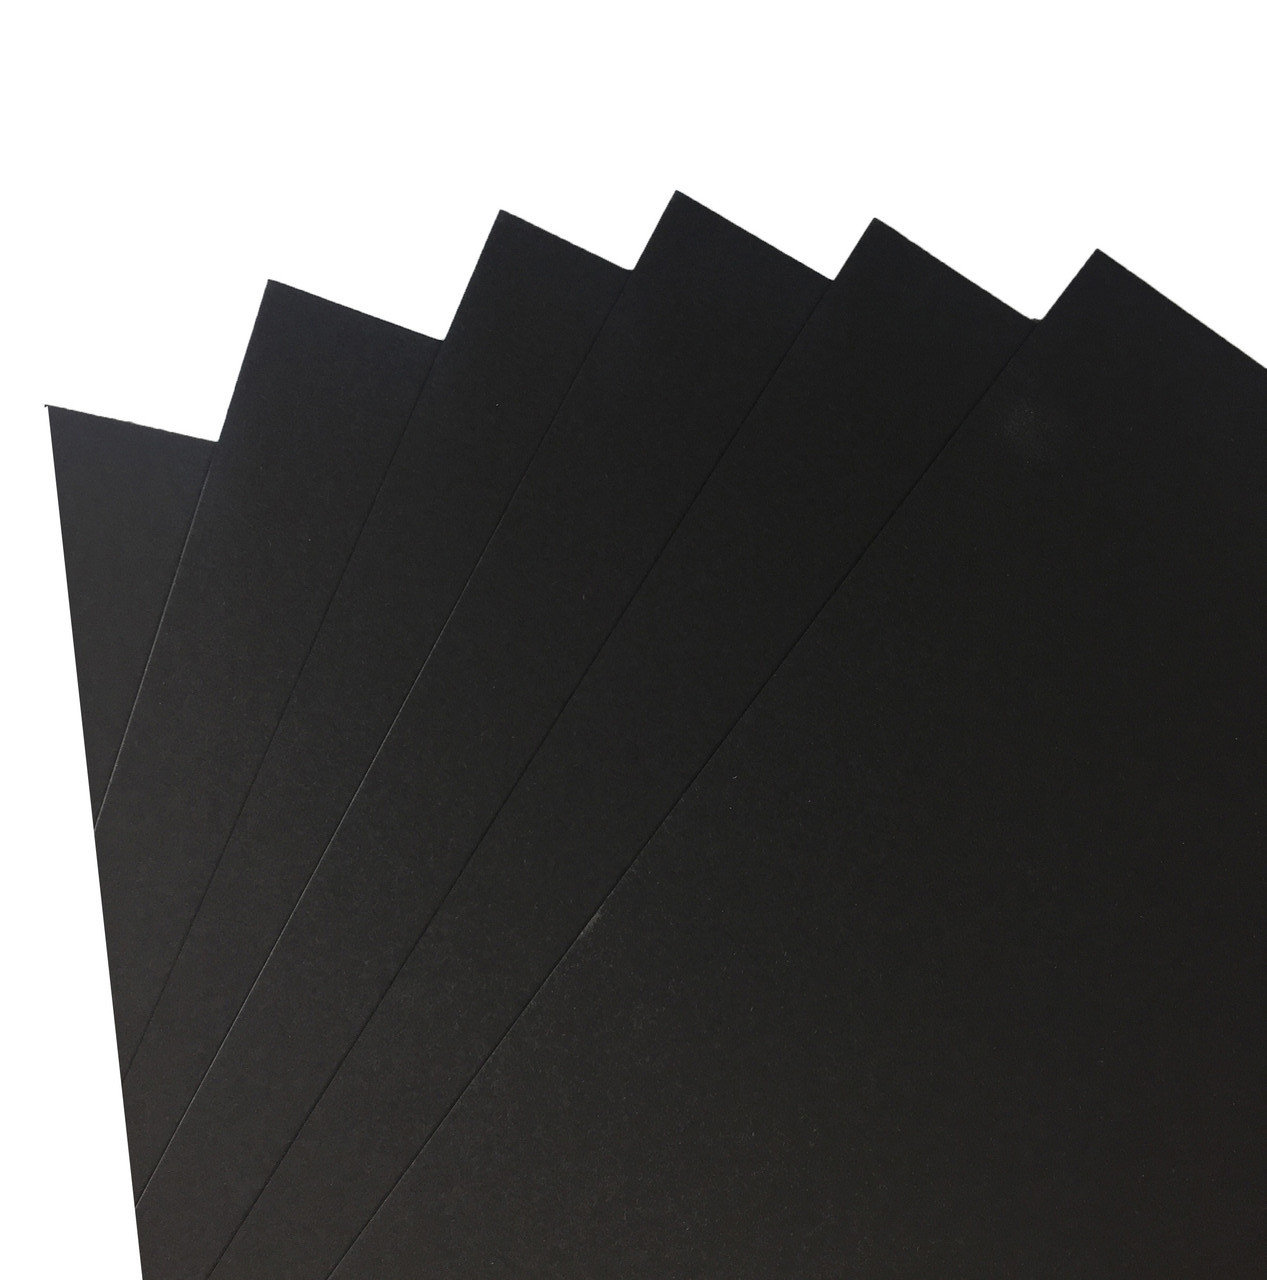 Бумага цветная Folia 50х70 см 300 г, черный бумага 50 70 130г м2 черная 1л folia